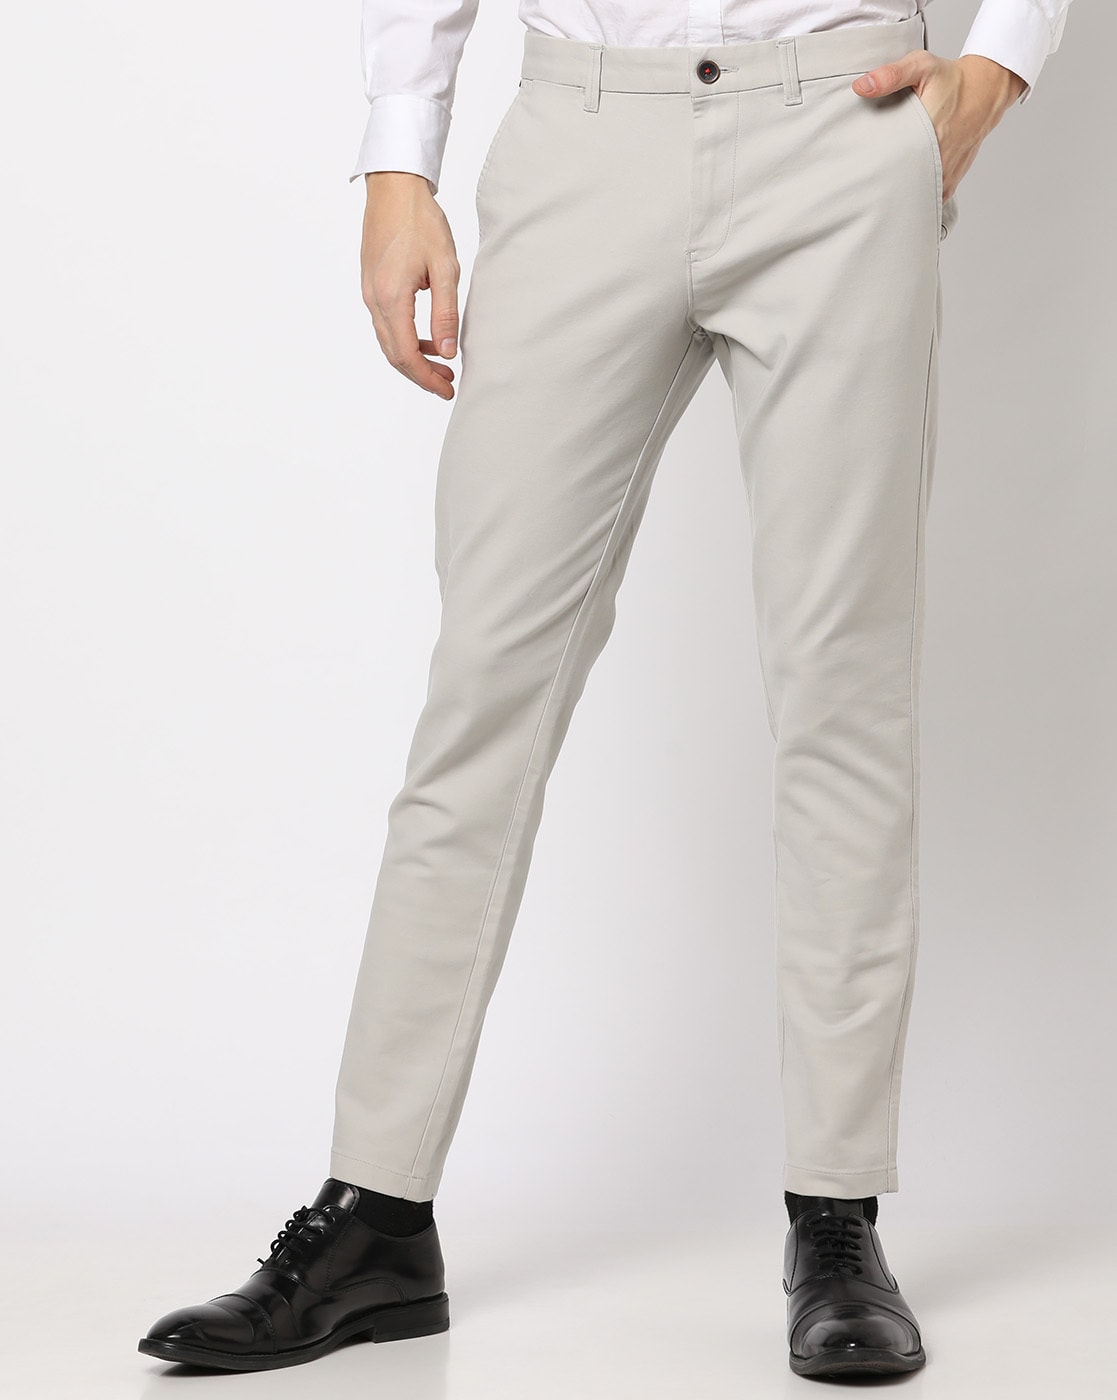 Buy Beige Cotton Textured Slim Fit Formal Trousers online  Looksgudin